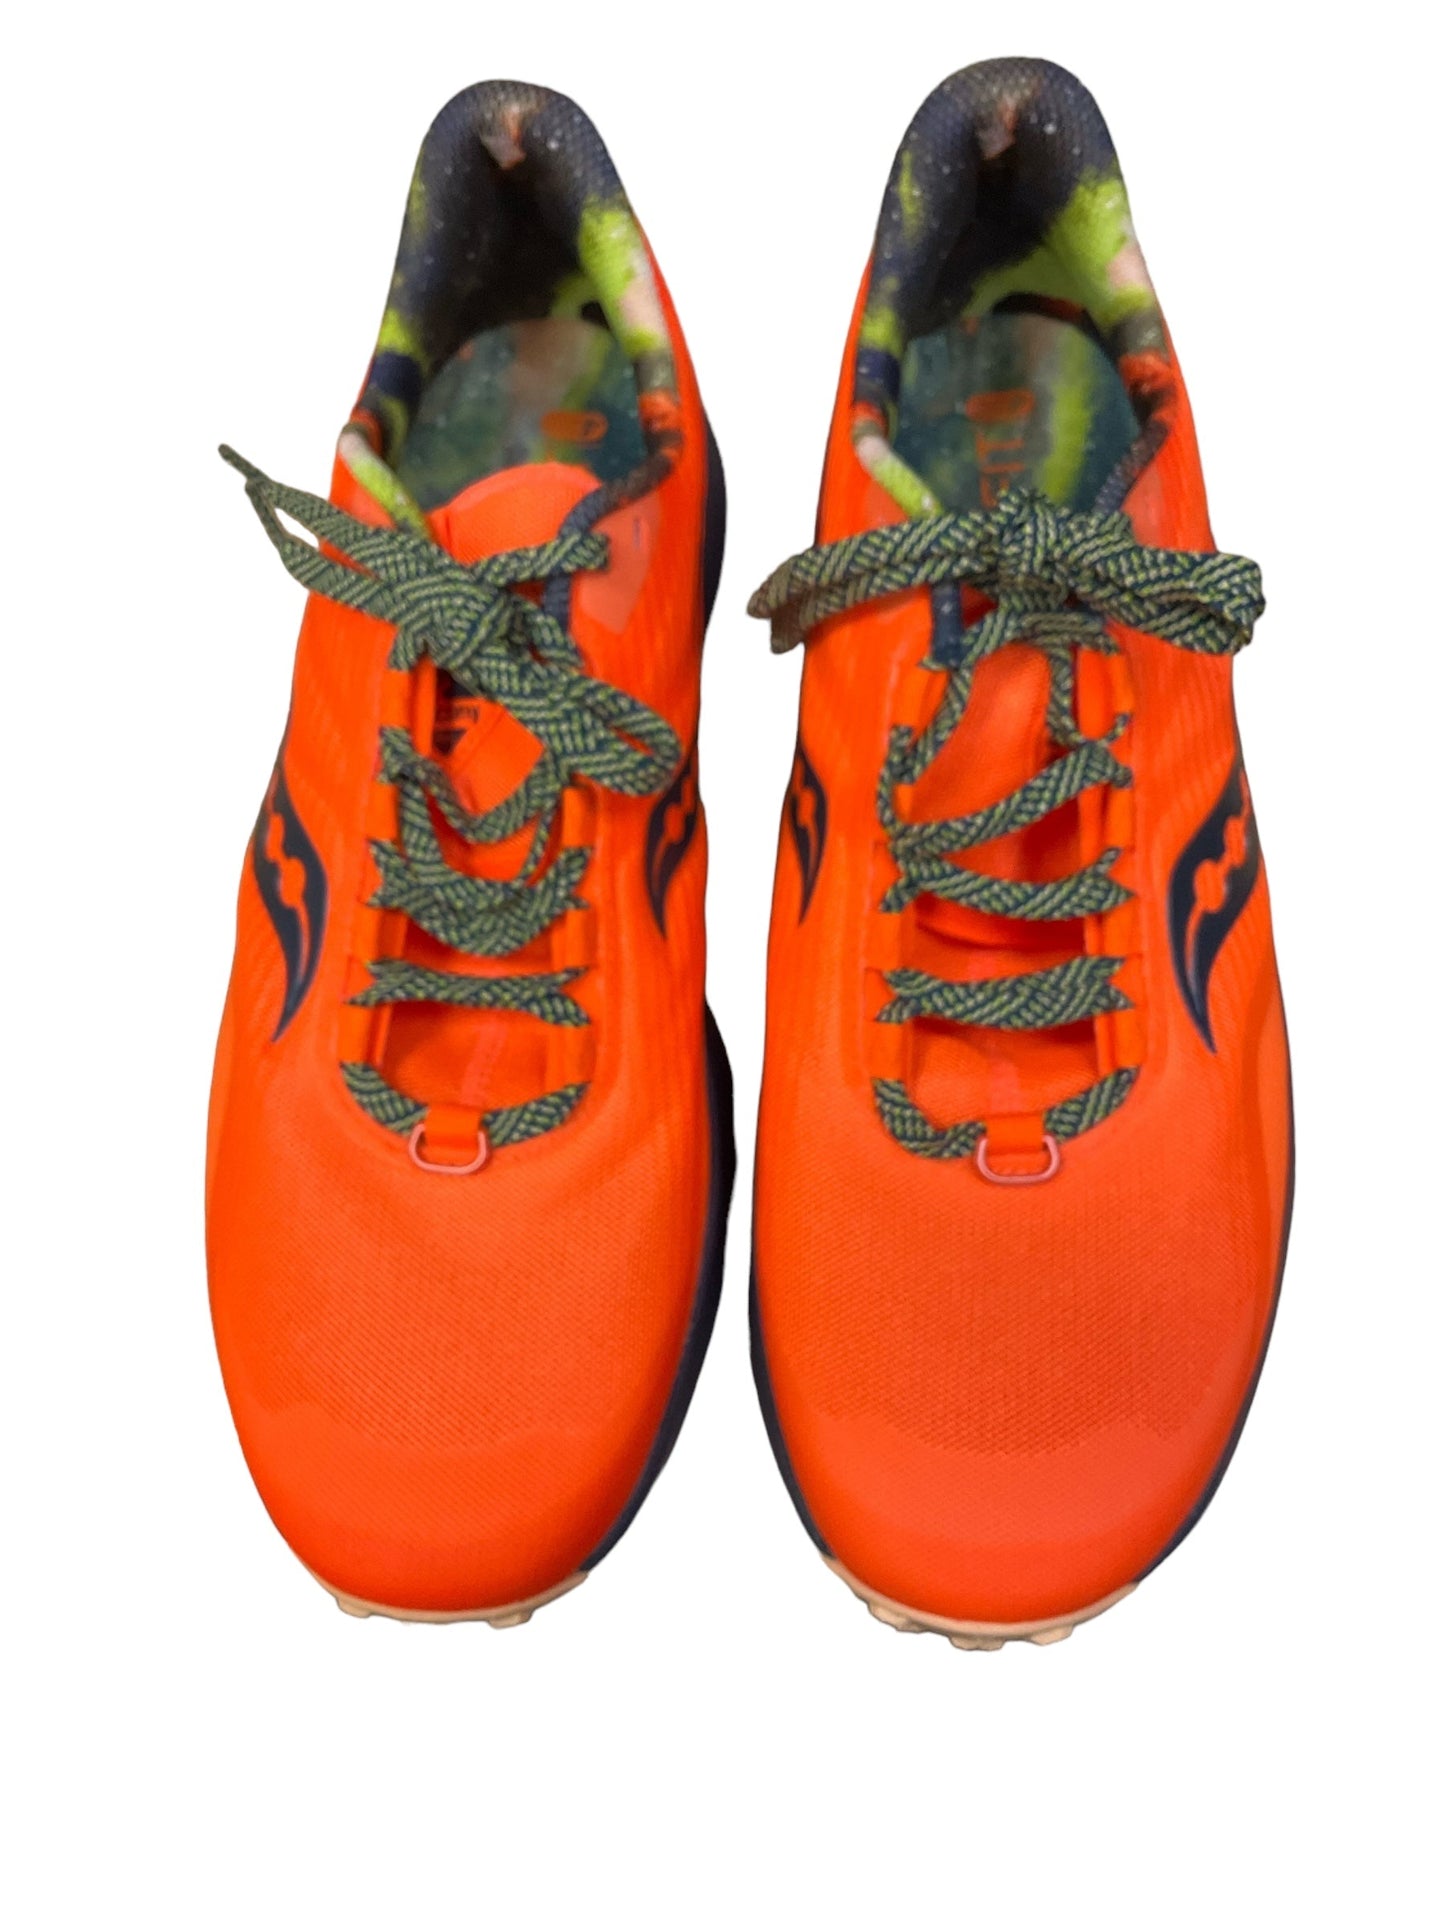 Orange Shoes Athletic Saucony, Size 11.5